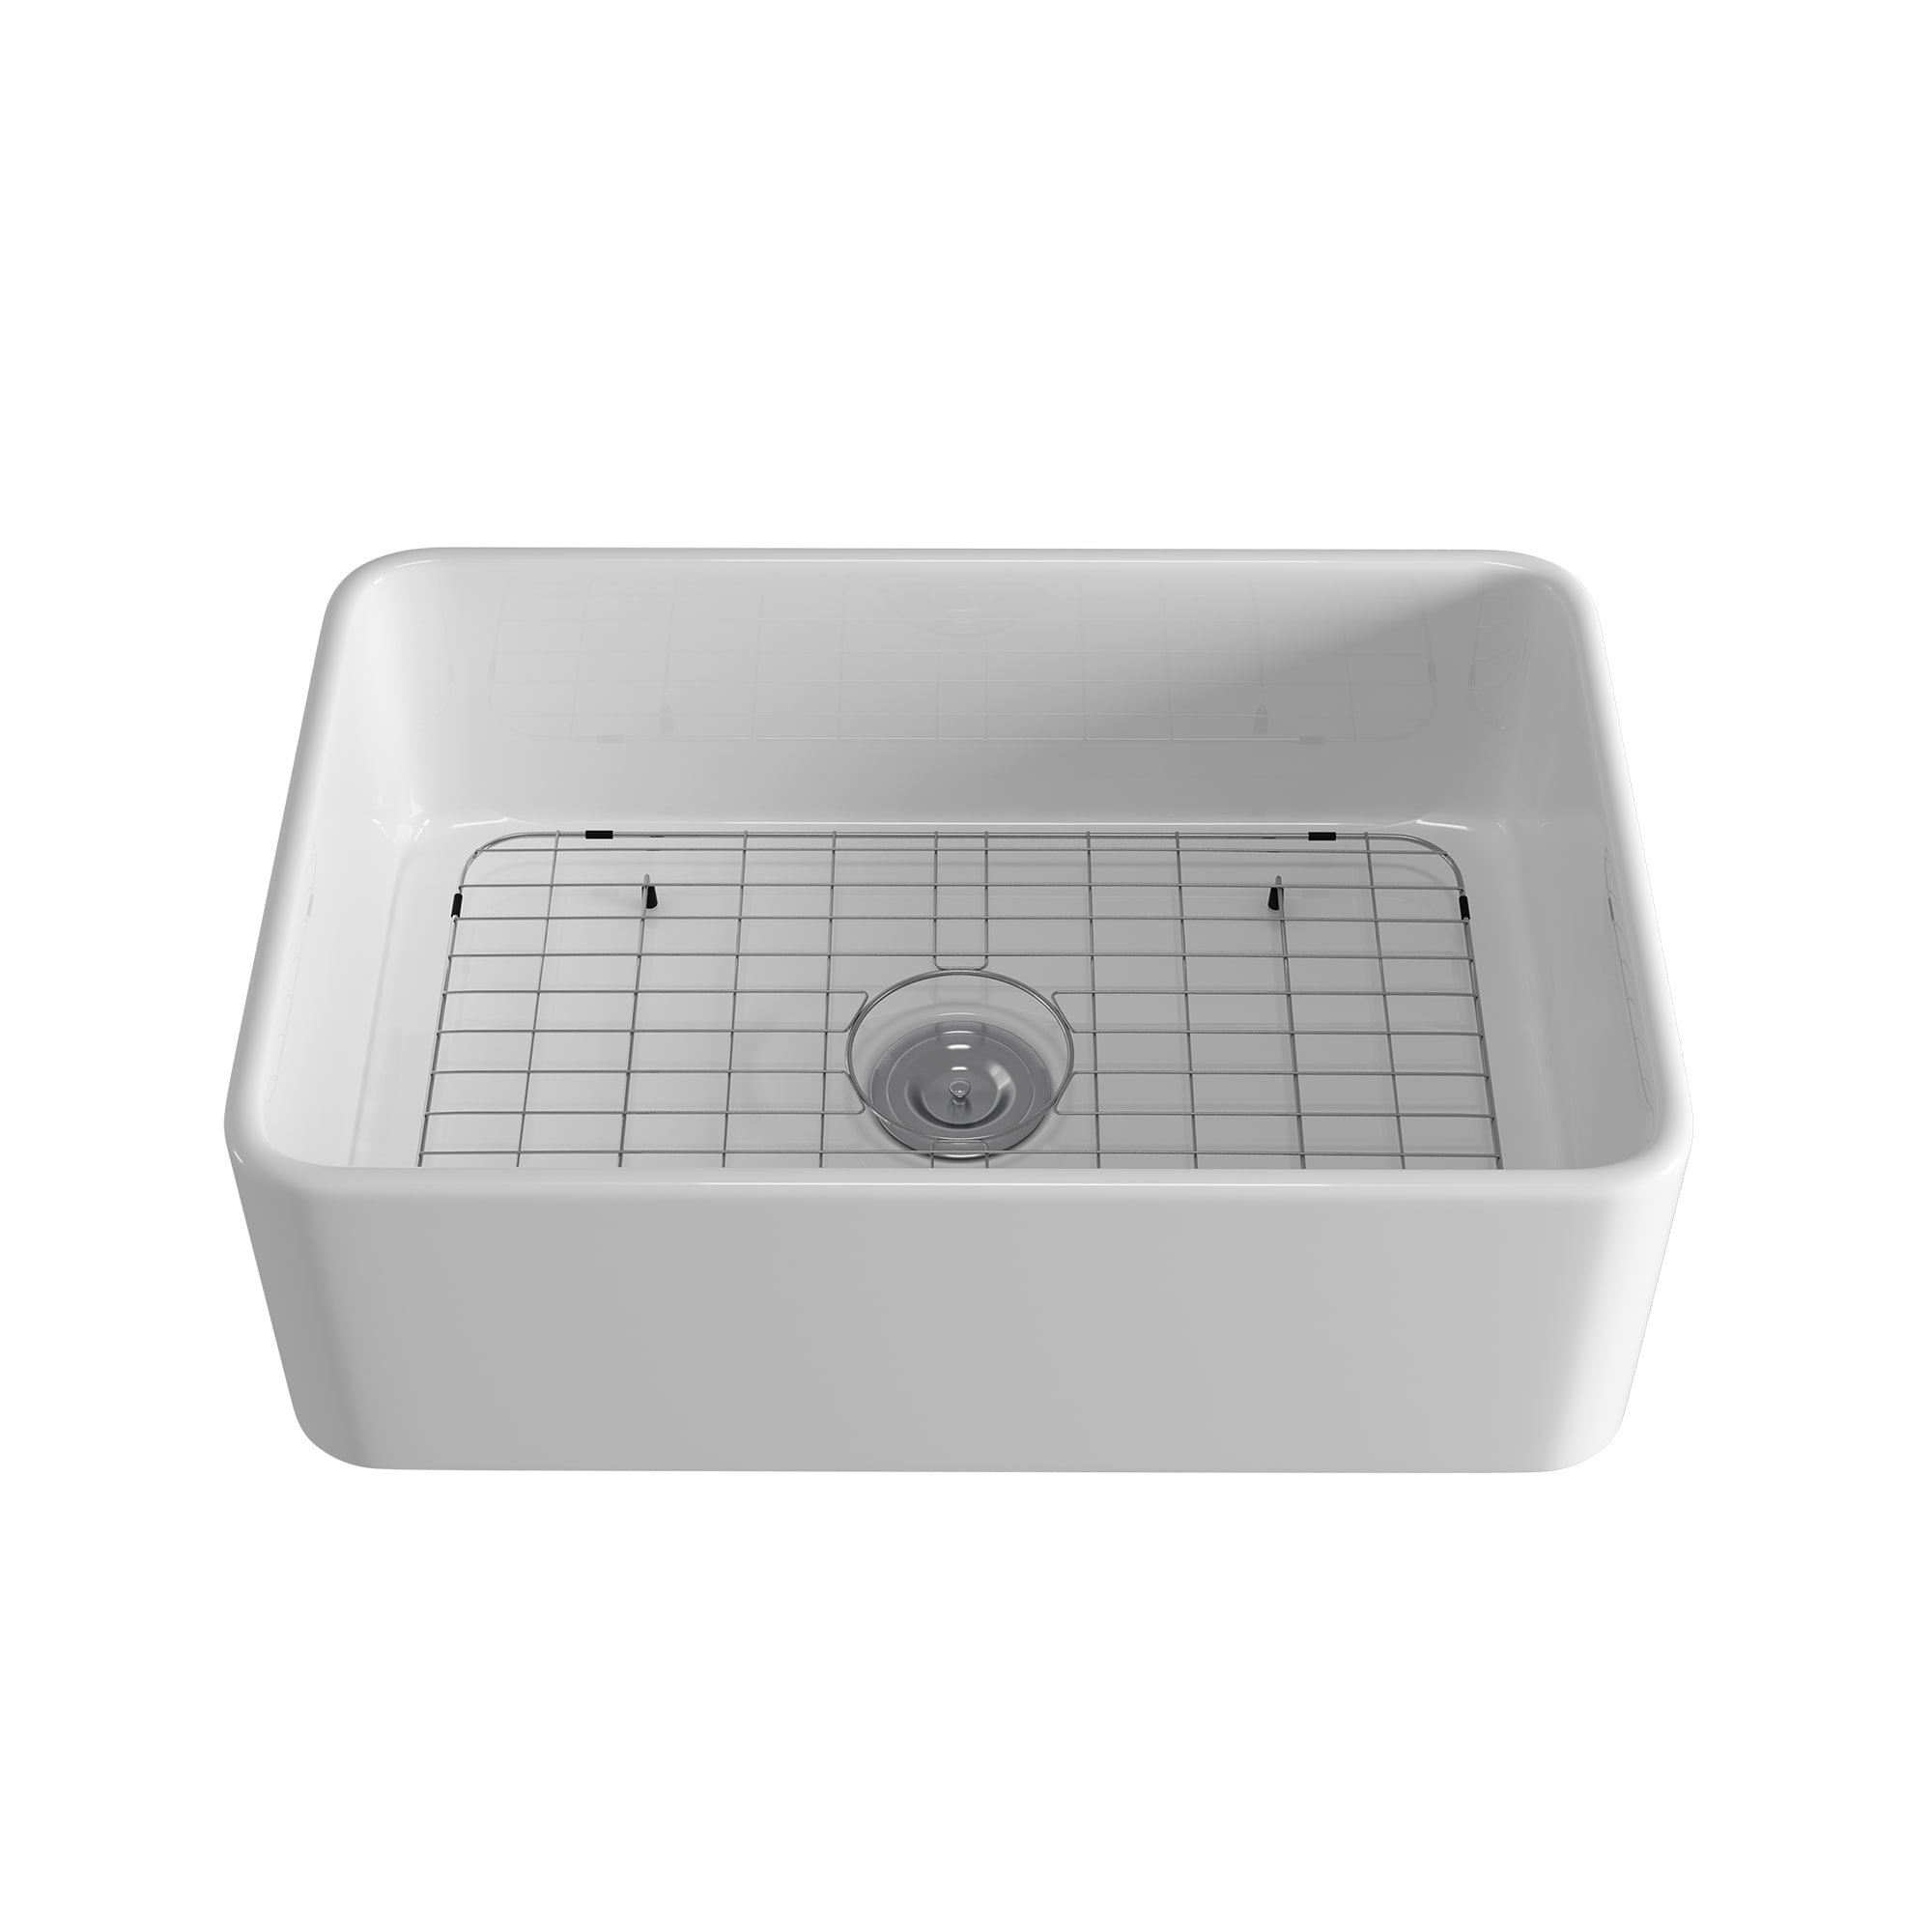 Eridanus ERI-FS-105MB 33 L x 20 W Farmhouse Kitchen Sink with Sink Grid and Basket Strainer Finish: Matte Black